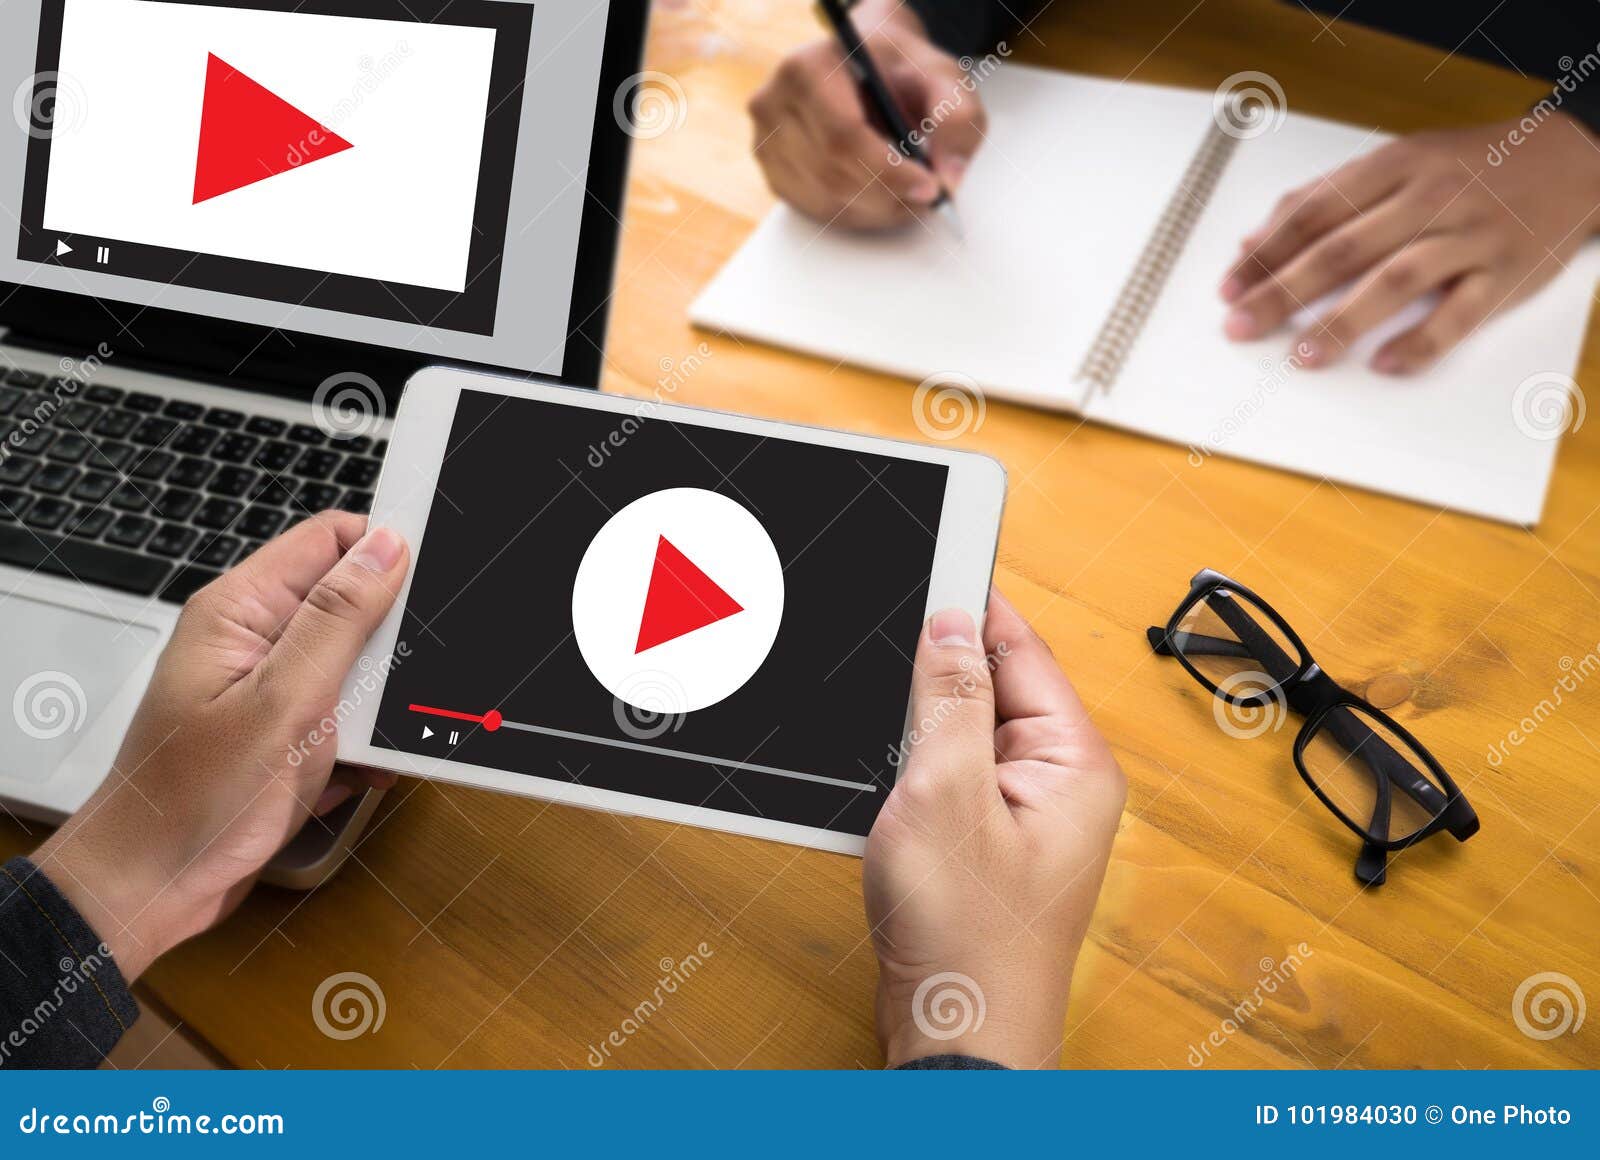 video marketing audio video , market interactive channels , bu